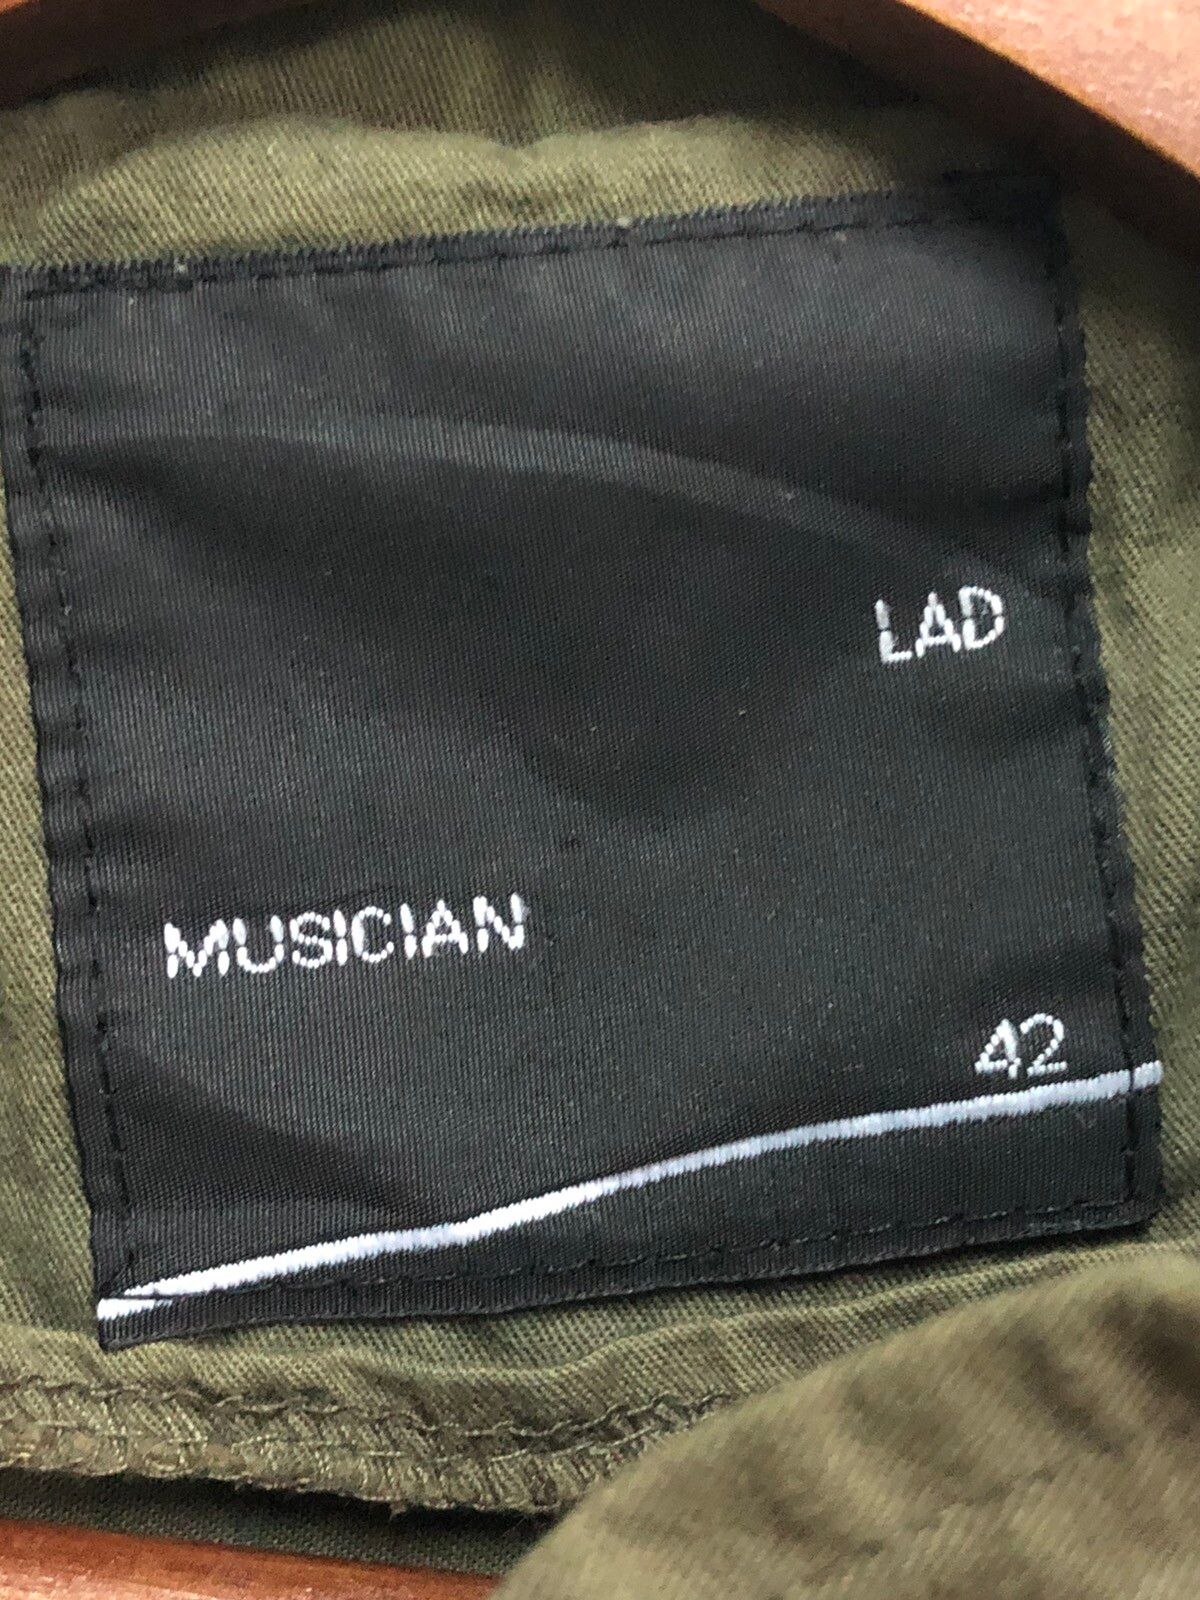 Lad Musician Fullzip Jacket - 3